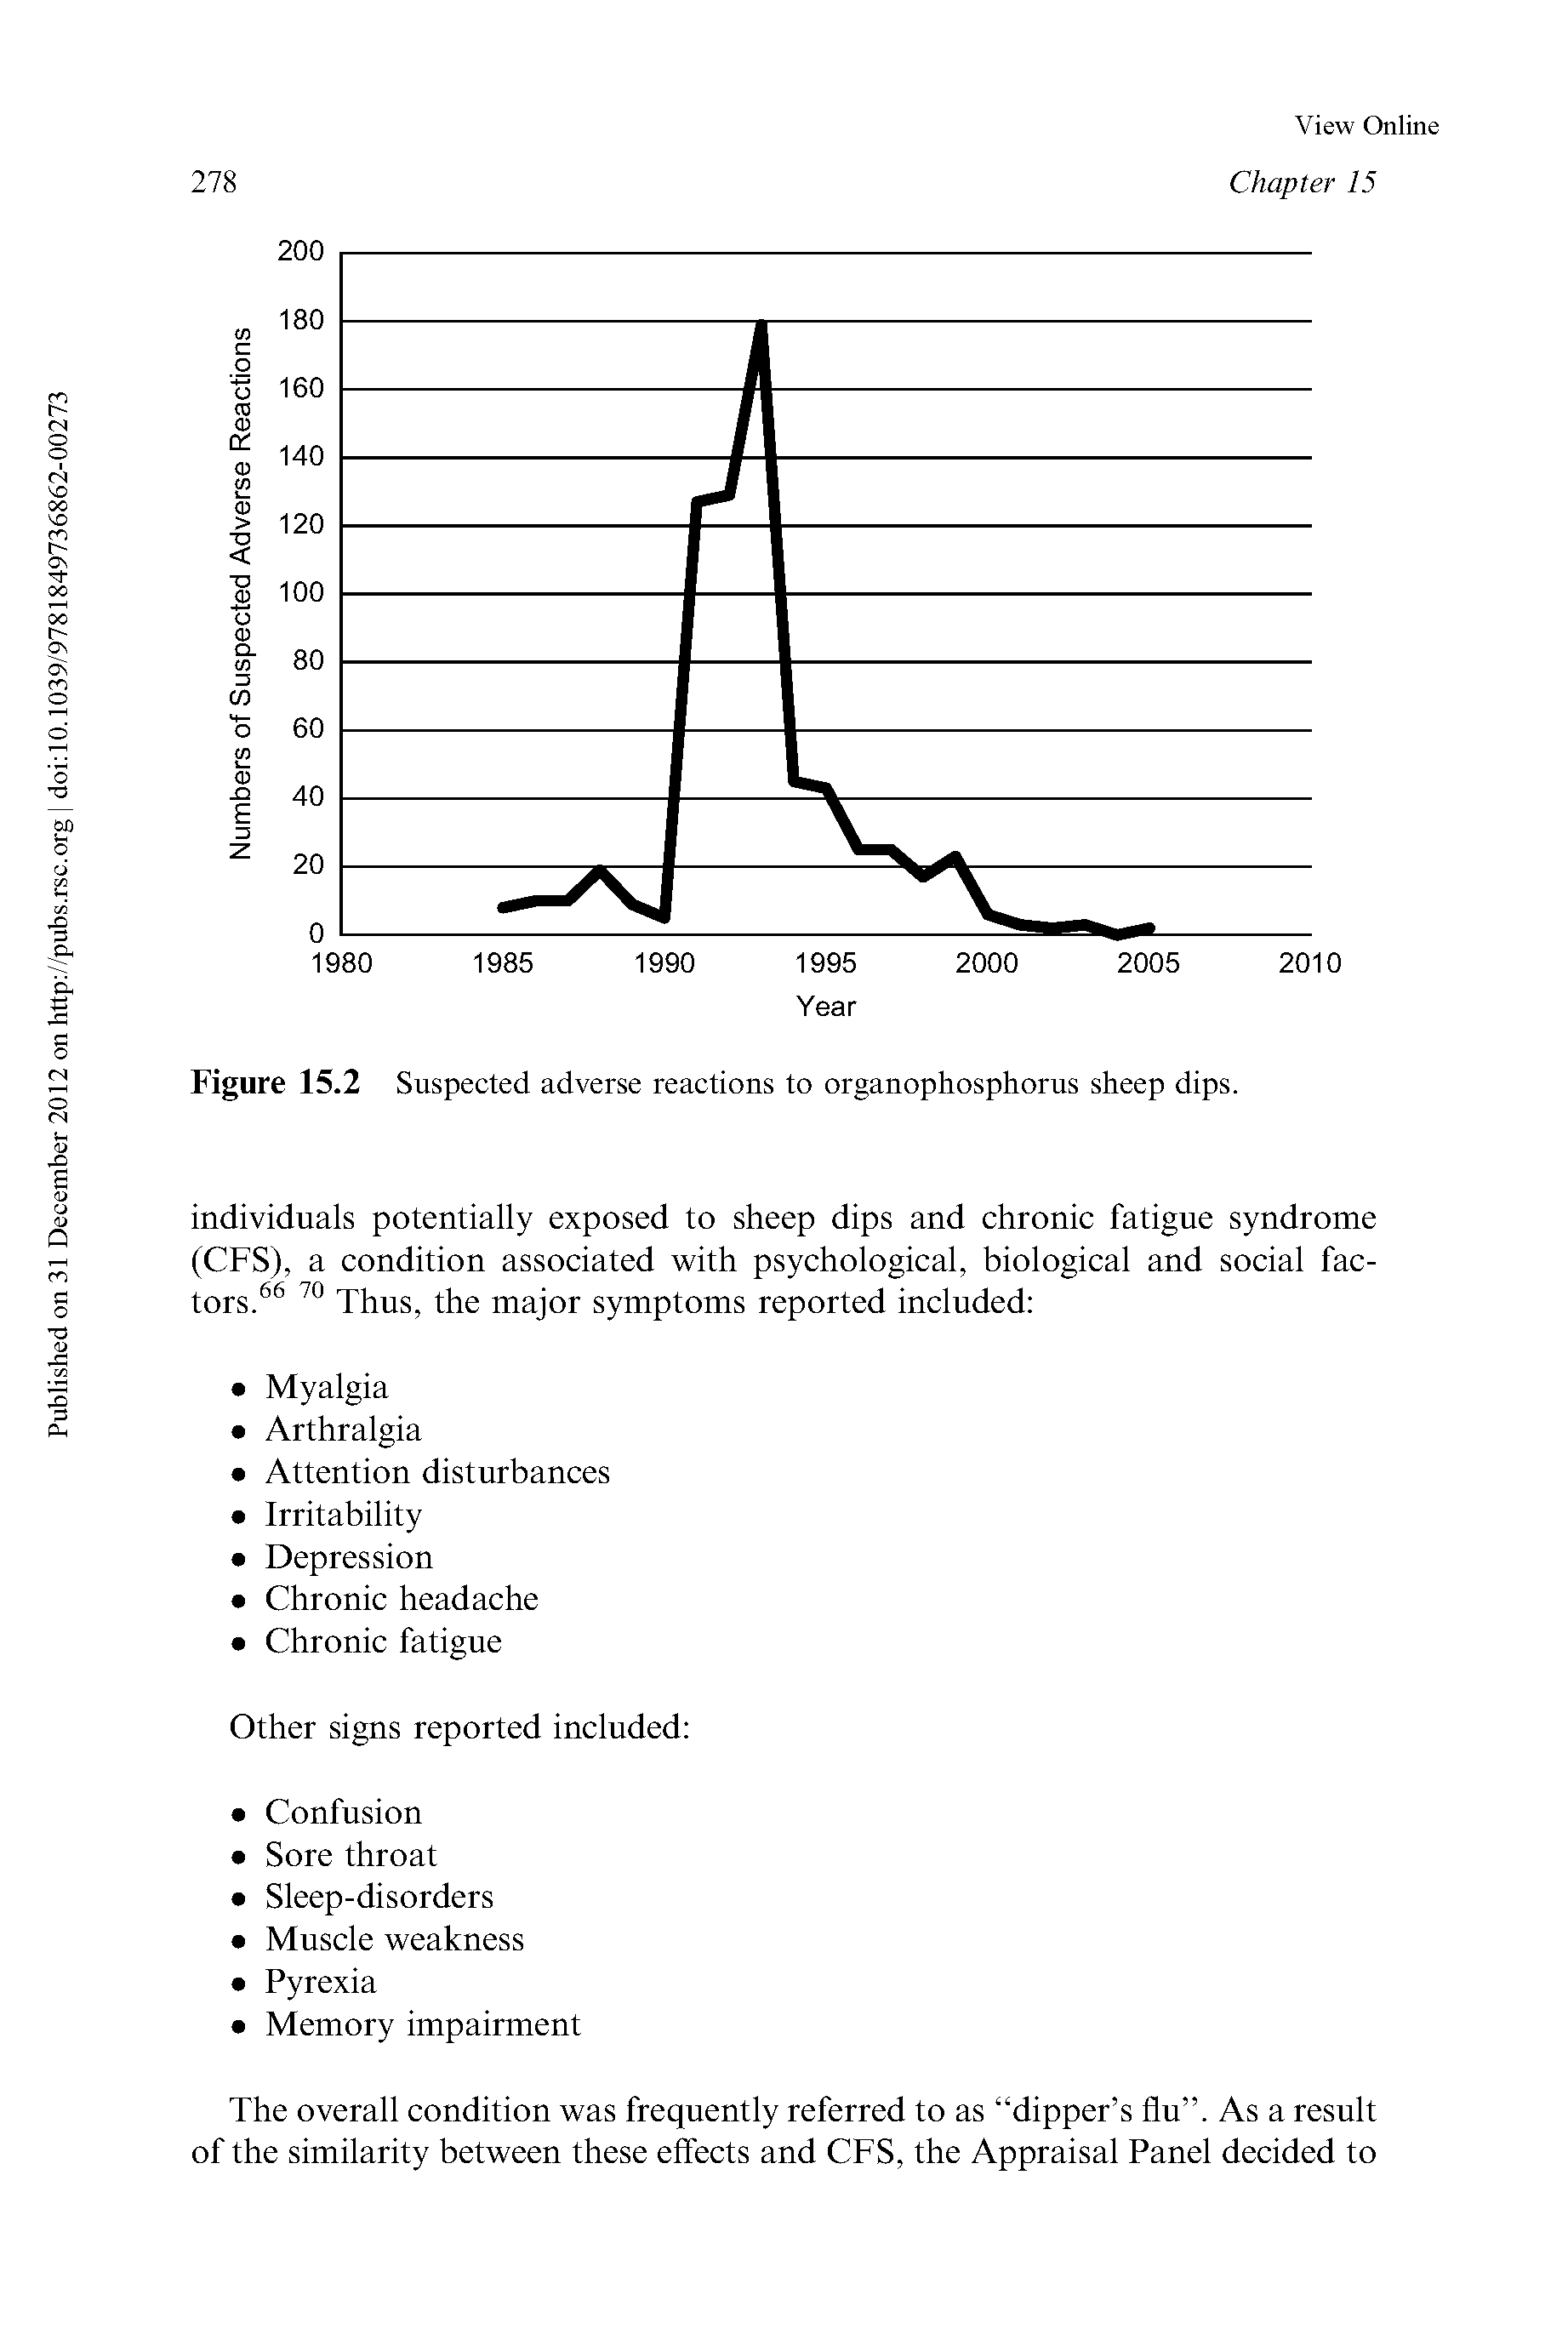 Figure 15.2 Suspected adverse reactions to organophosphorus sheep dips.